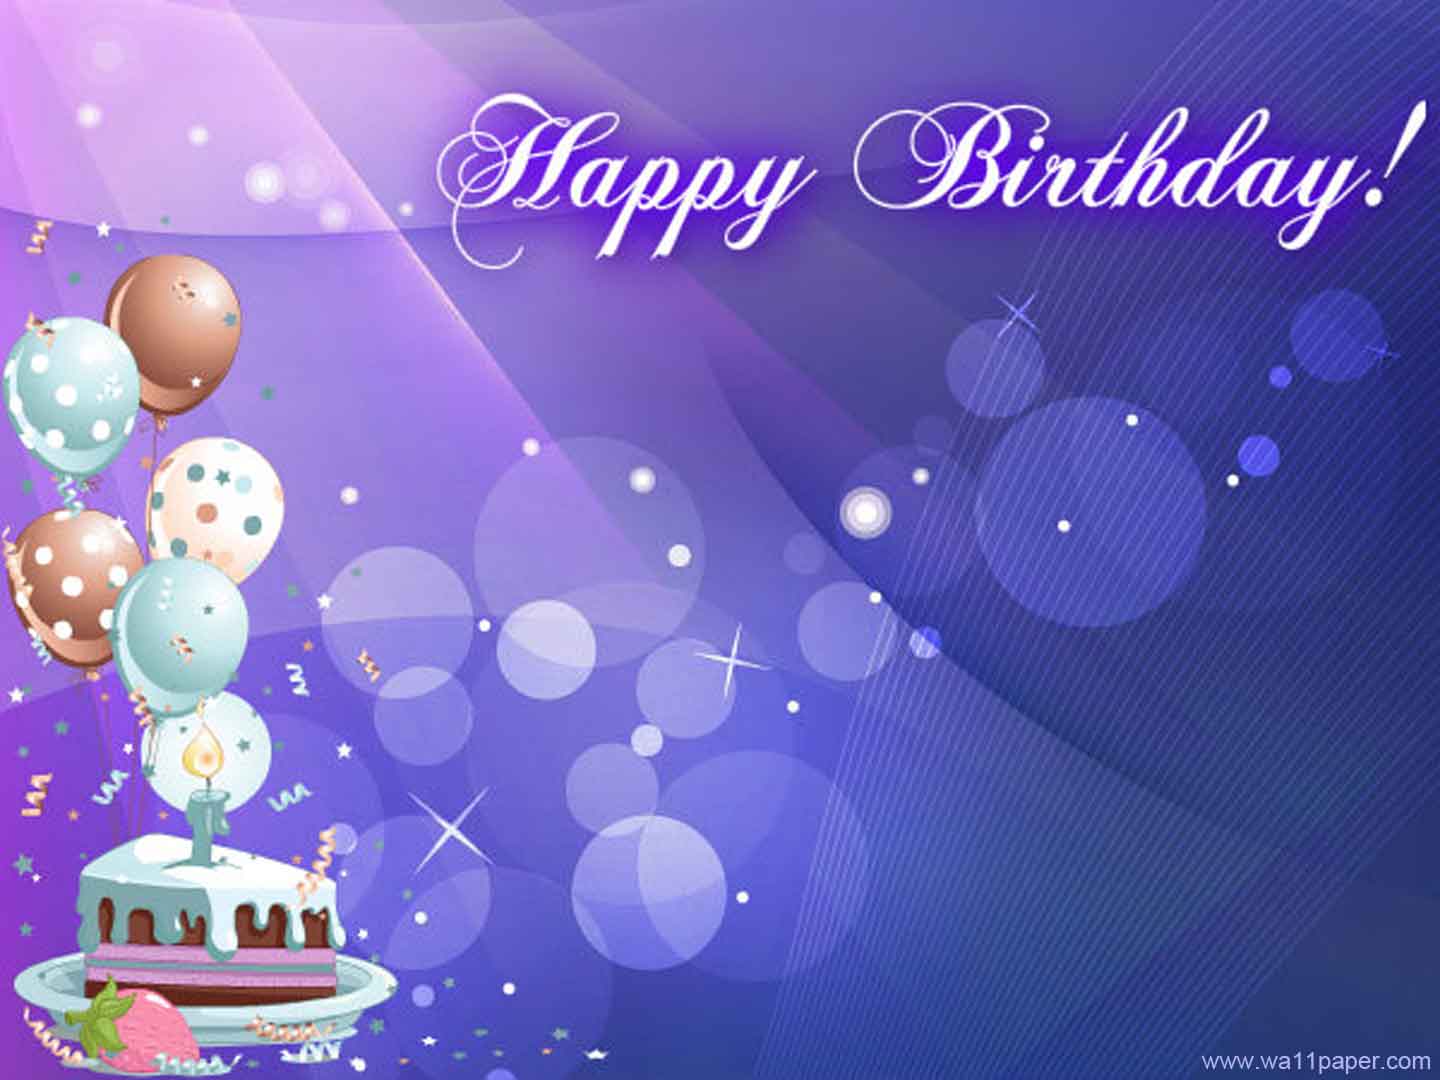 birthday, happy birthday, holiday, balloon, cake